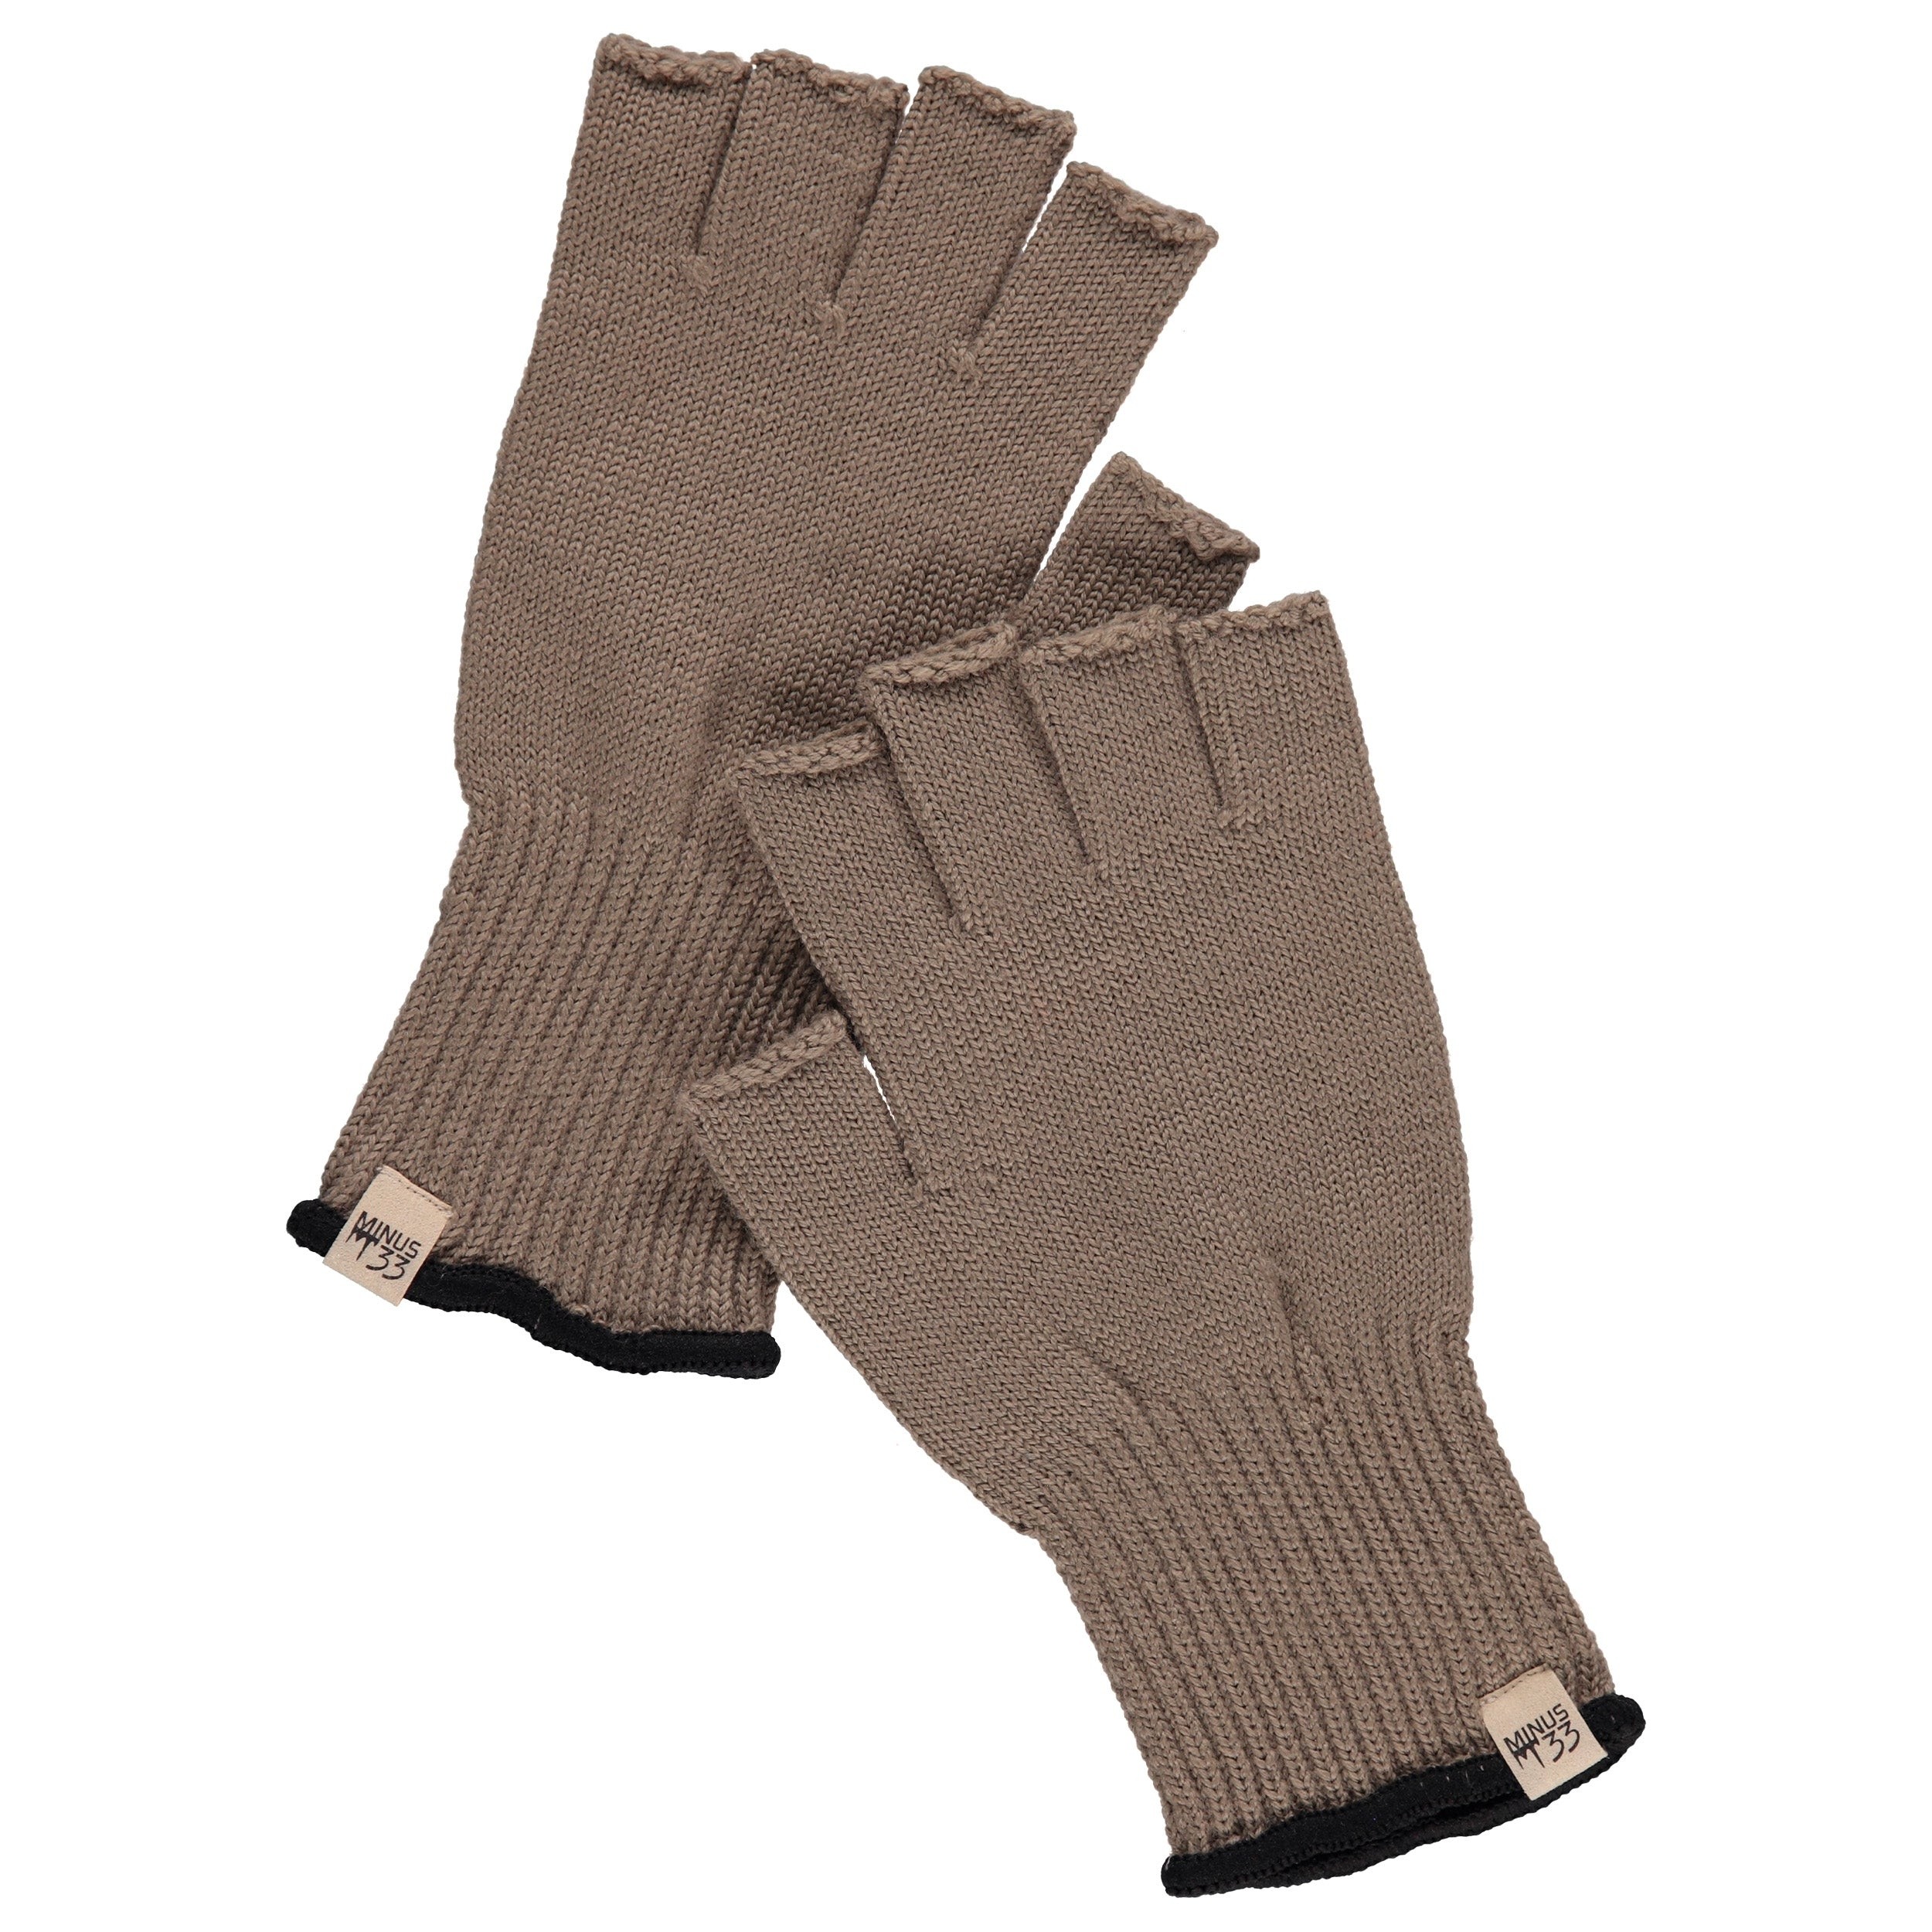 Minus33 Merino Wool Fingerless Gloves Lightweight - Tan 499